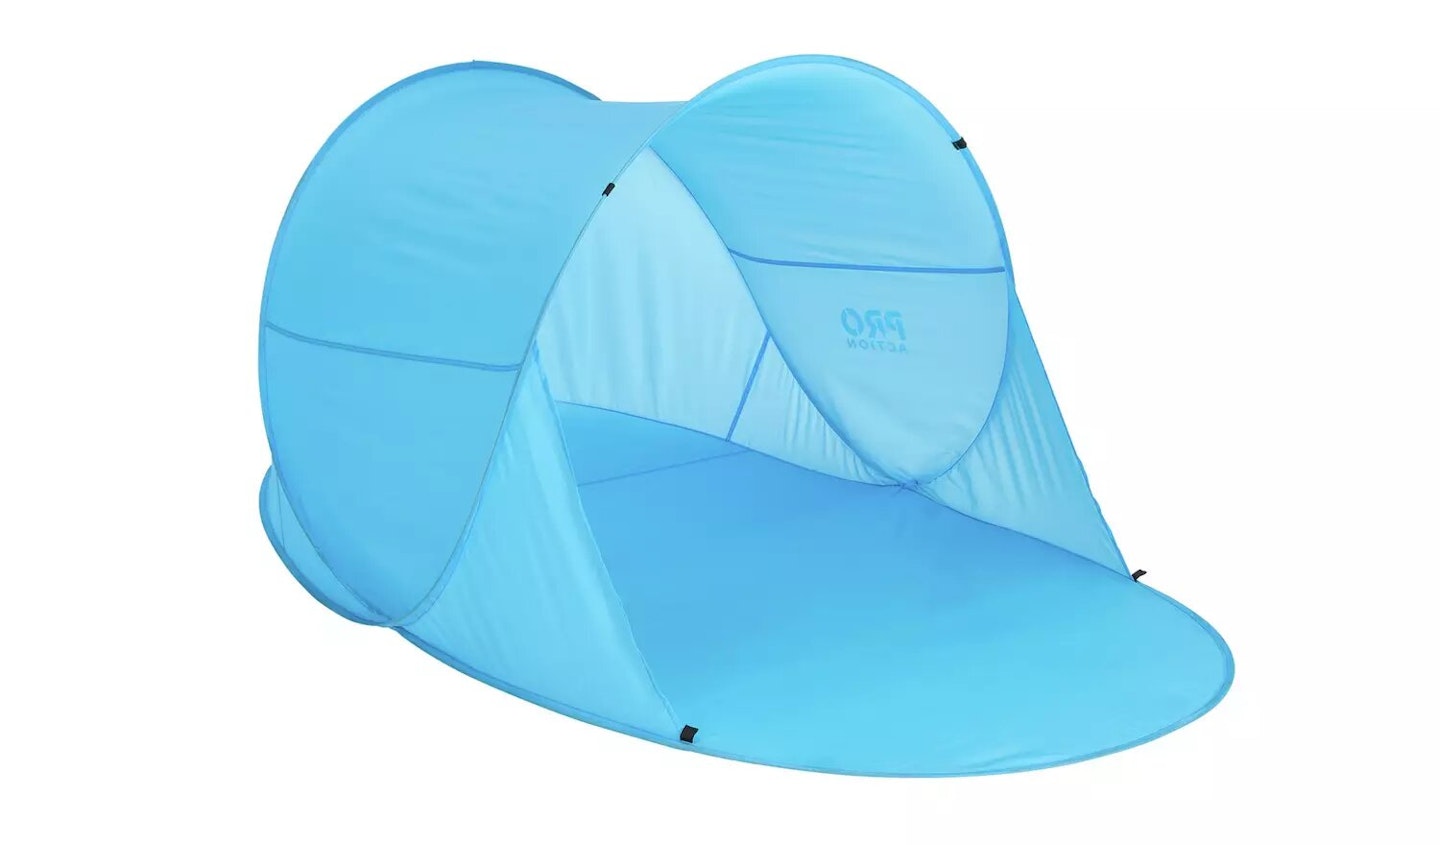 Best for UV protection: Pop Up Shelter